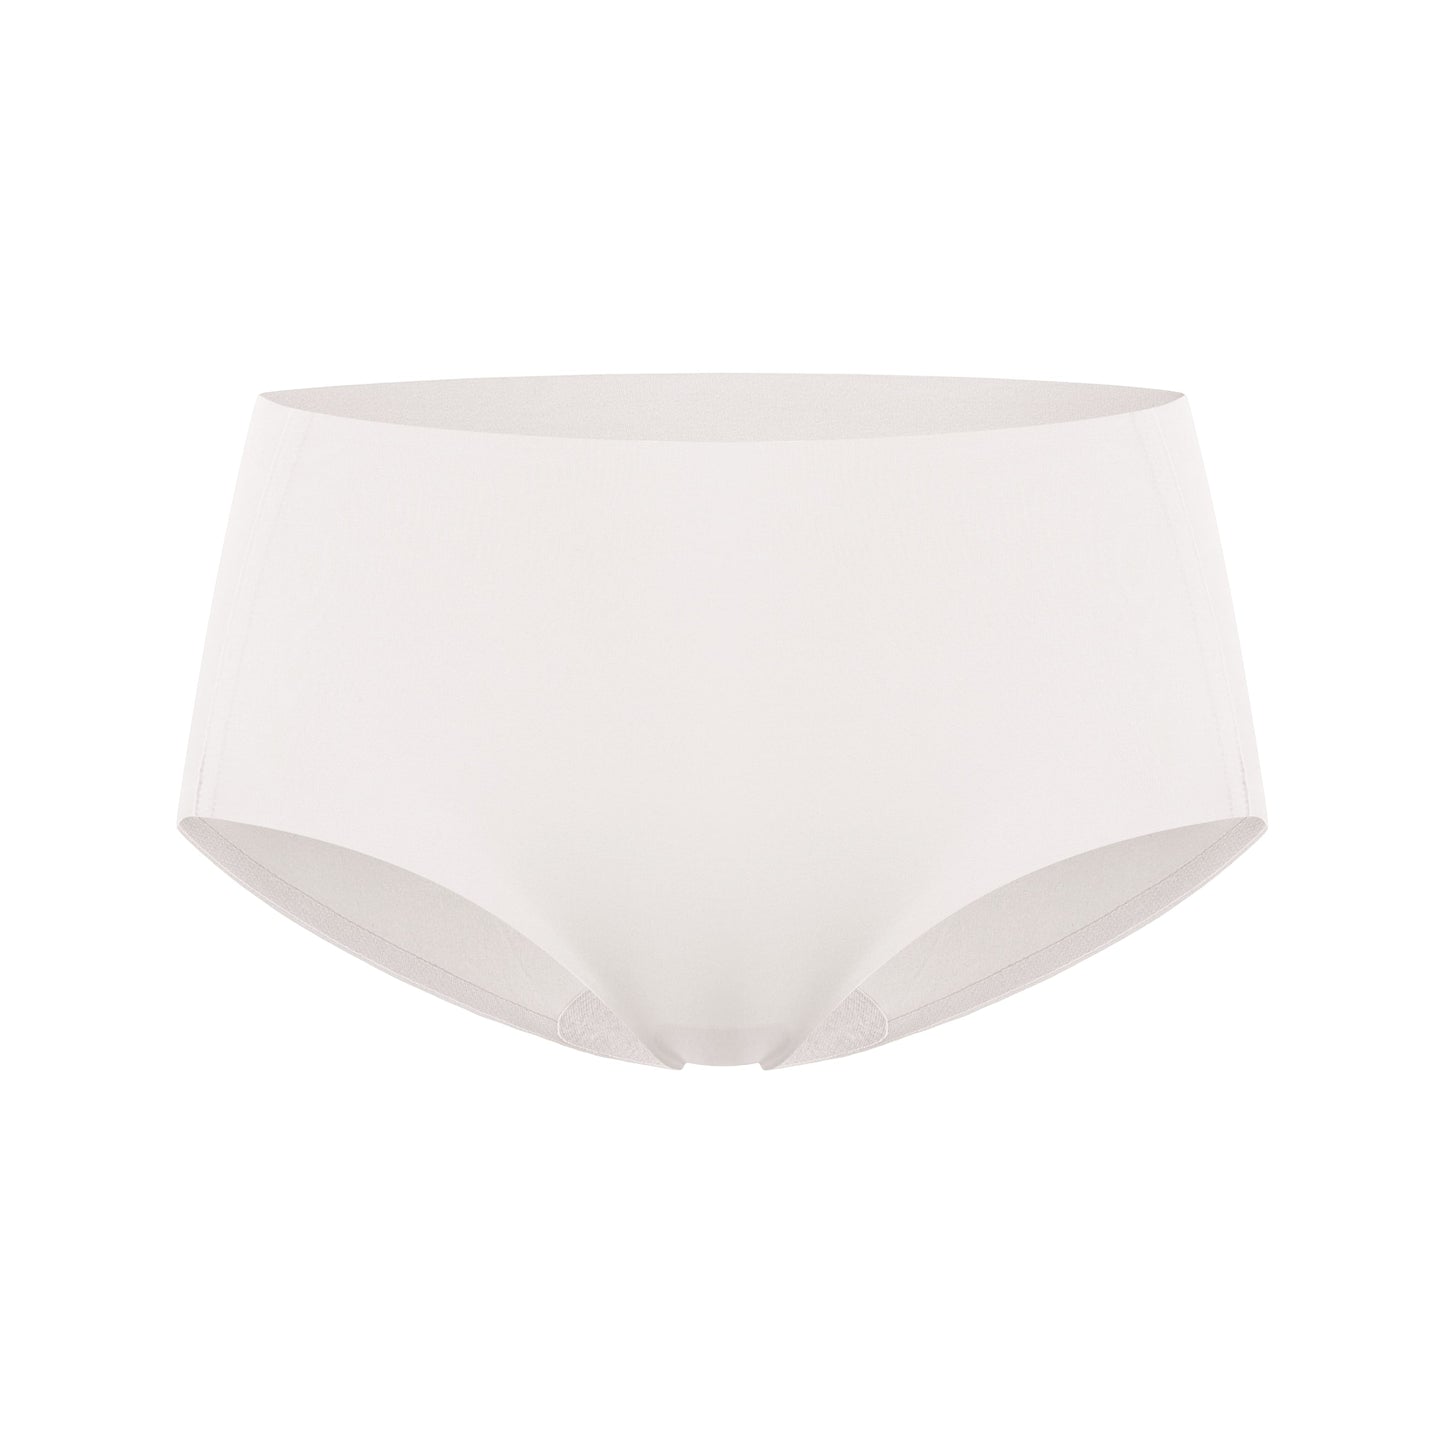 Flat lay image of white underwear